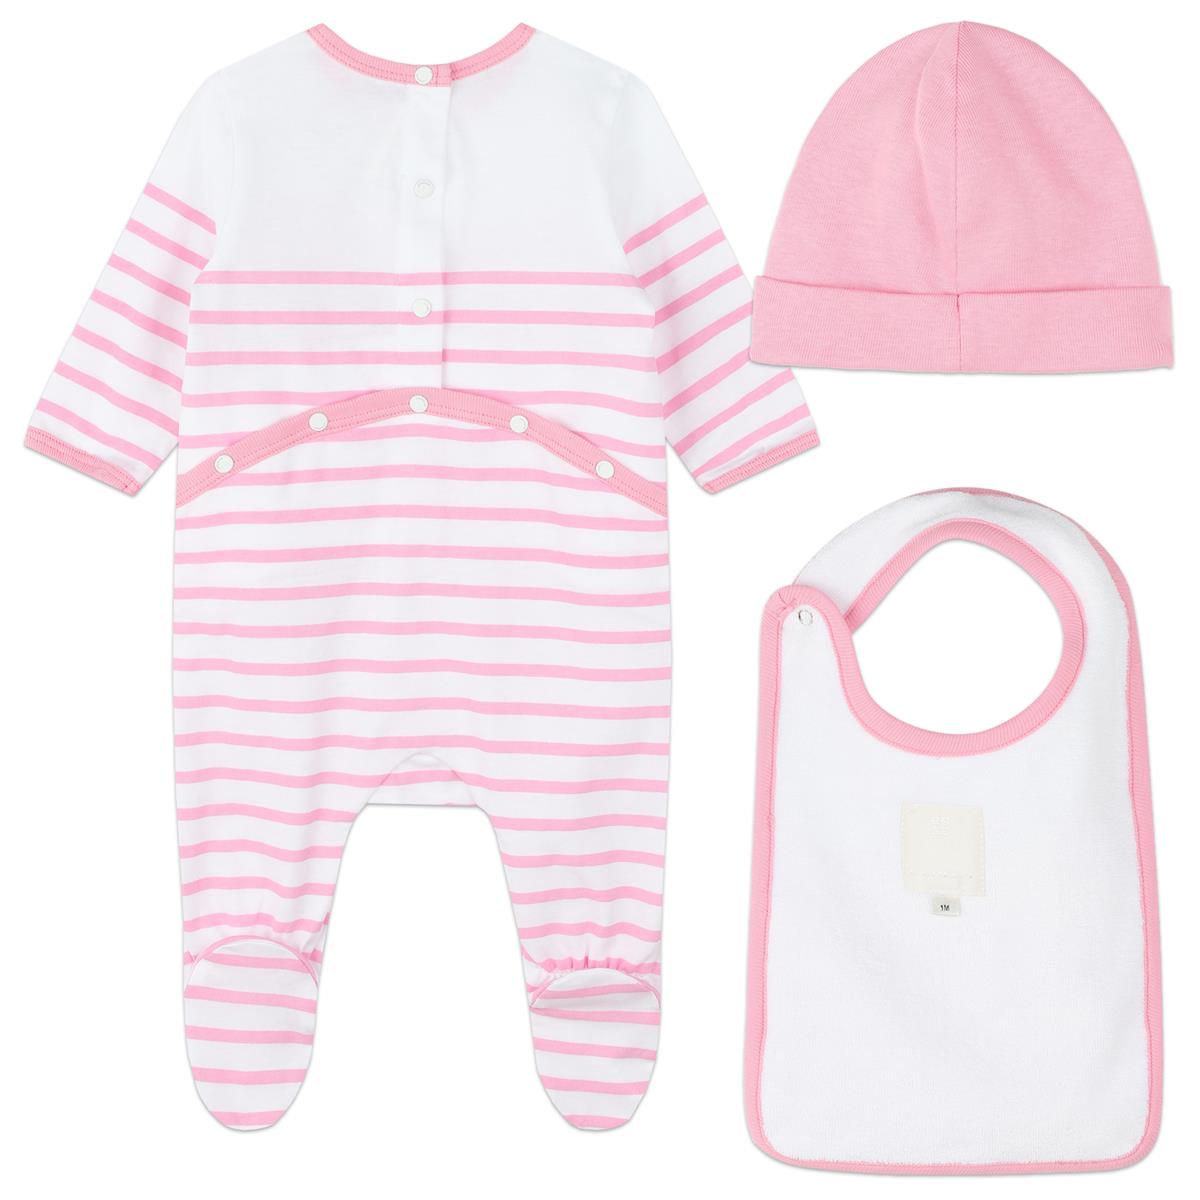 Baby Boys & Girls Pink Stripes Cotton Babysuit Set